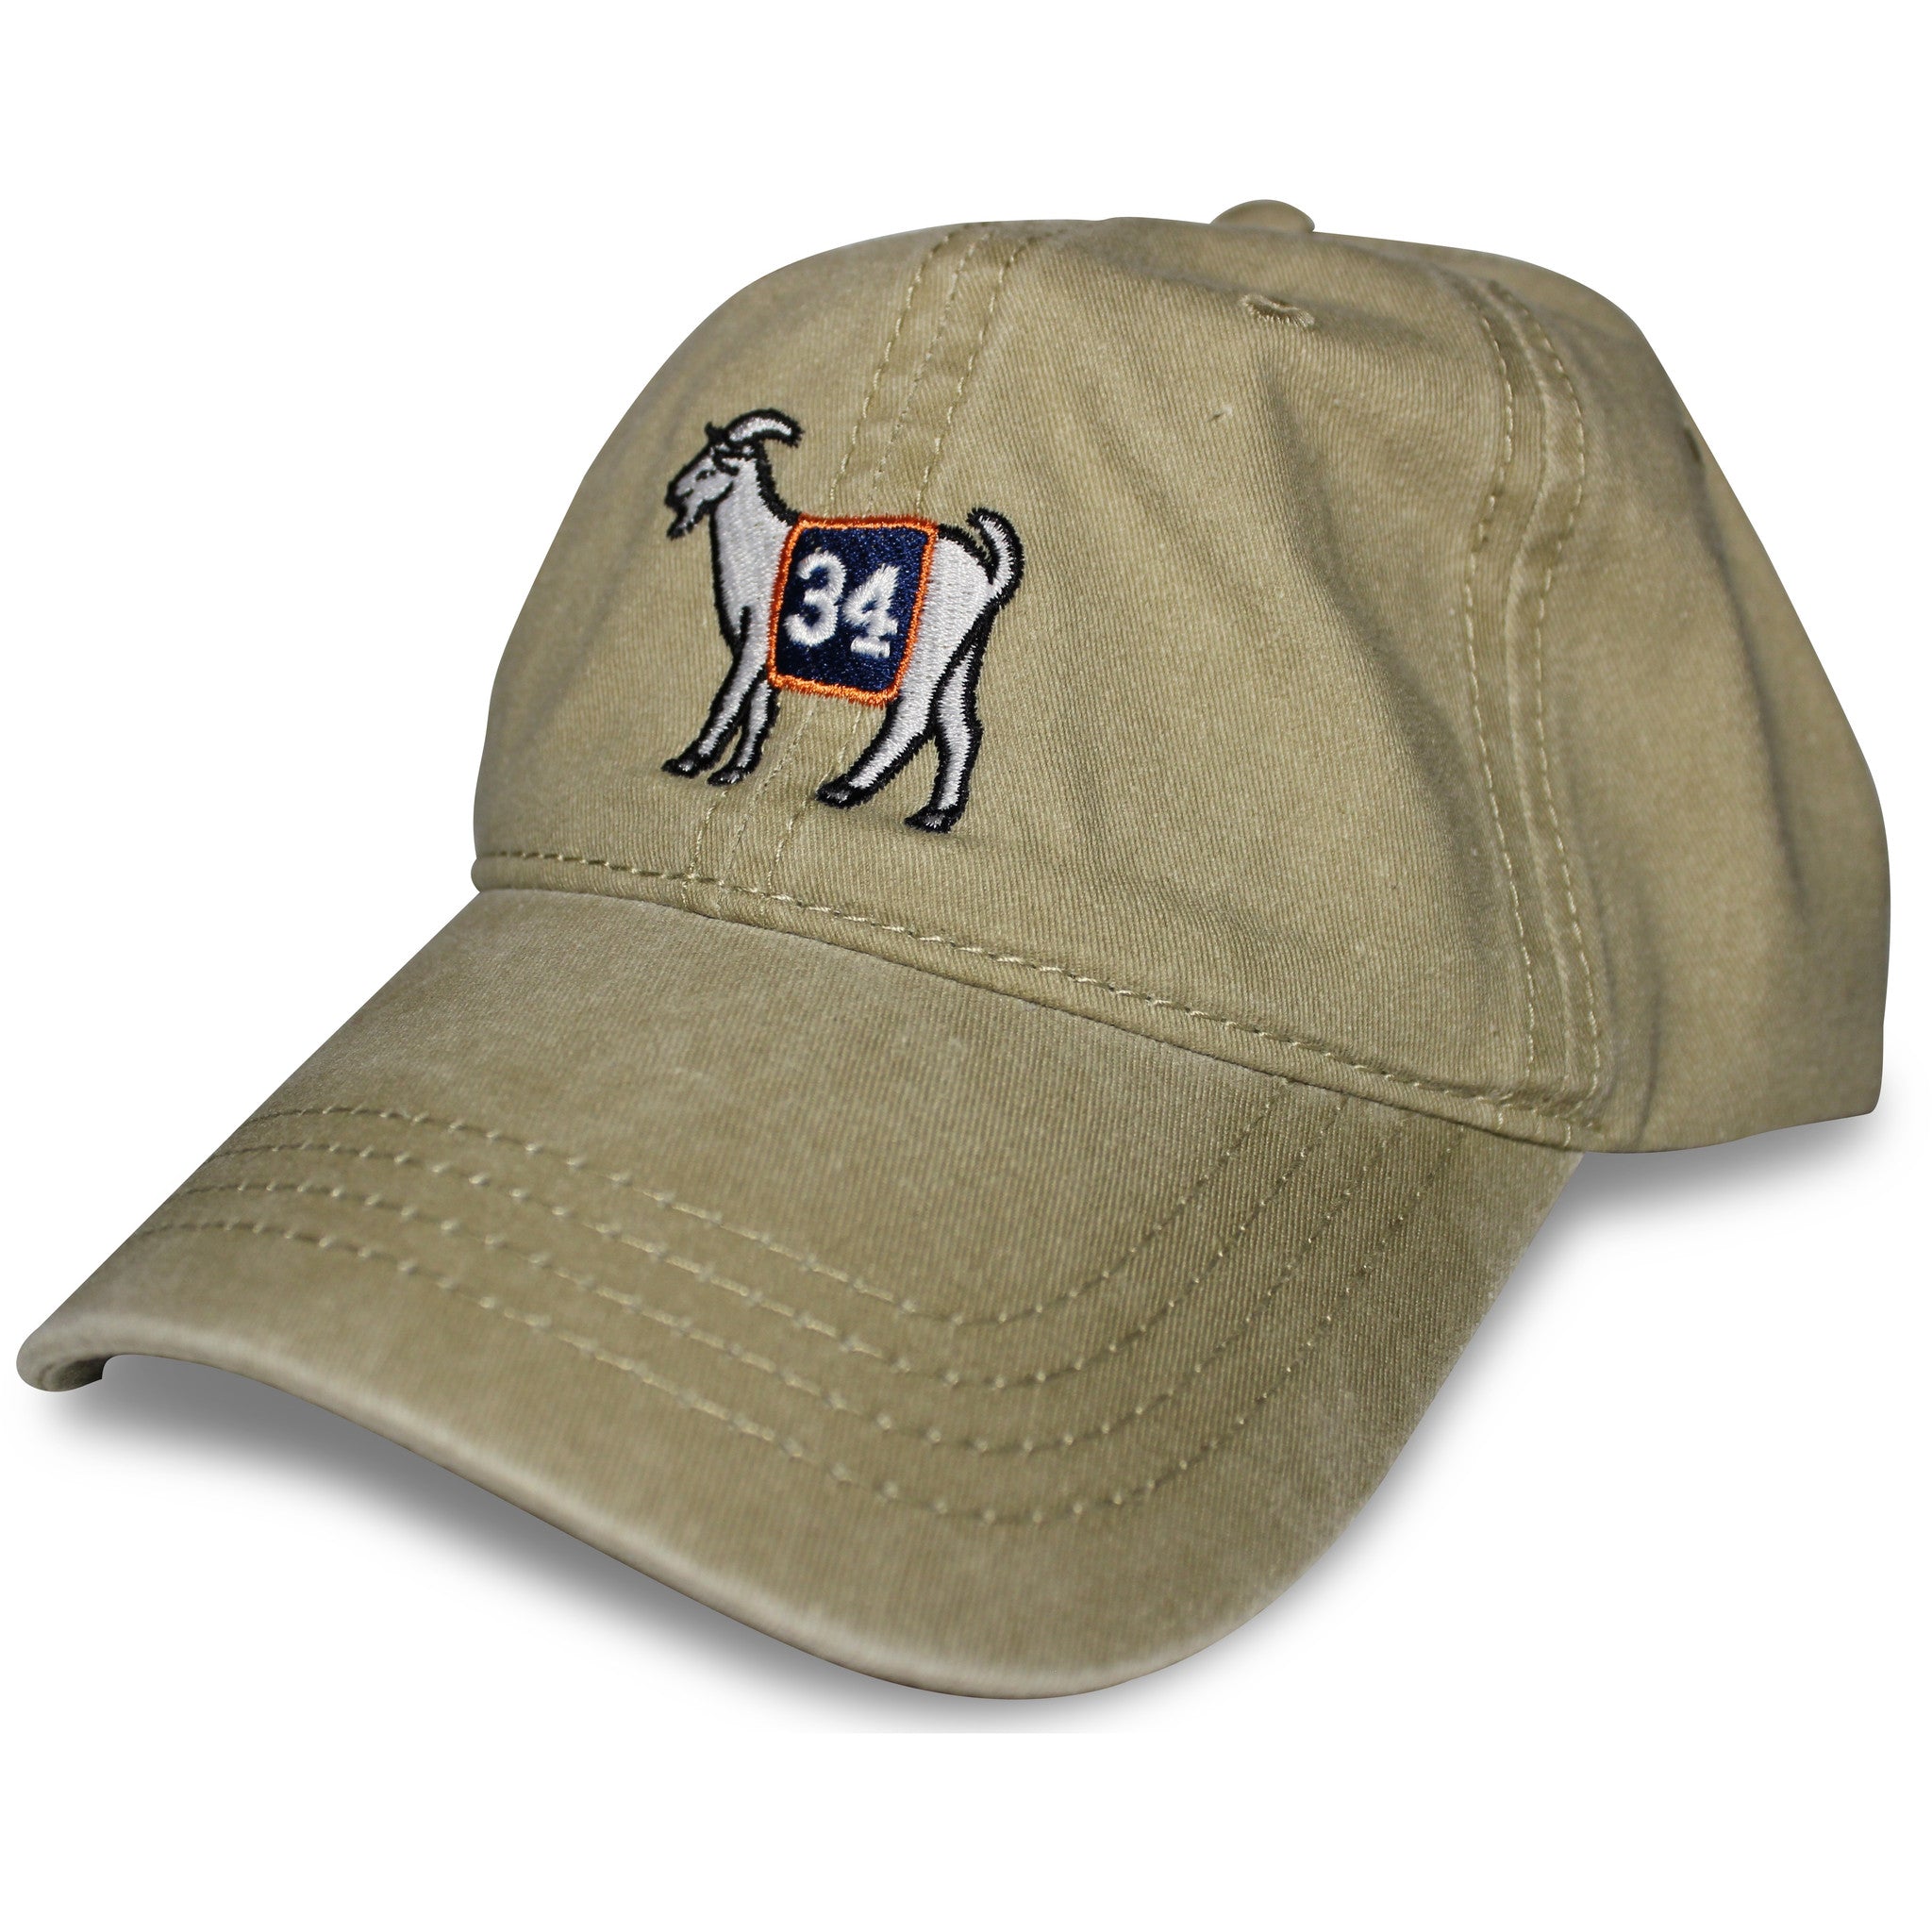 Auburn #34 GOAT Dad hat